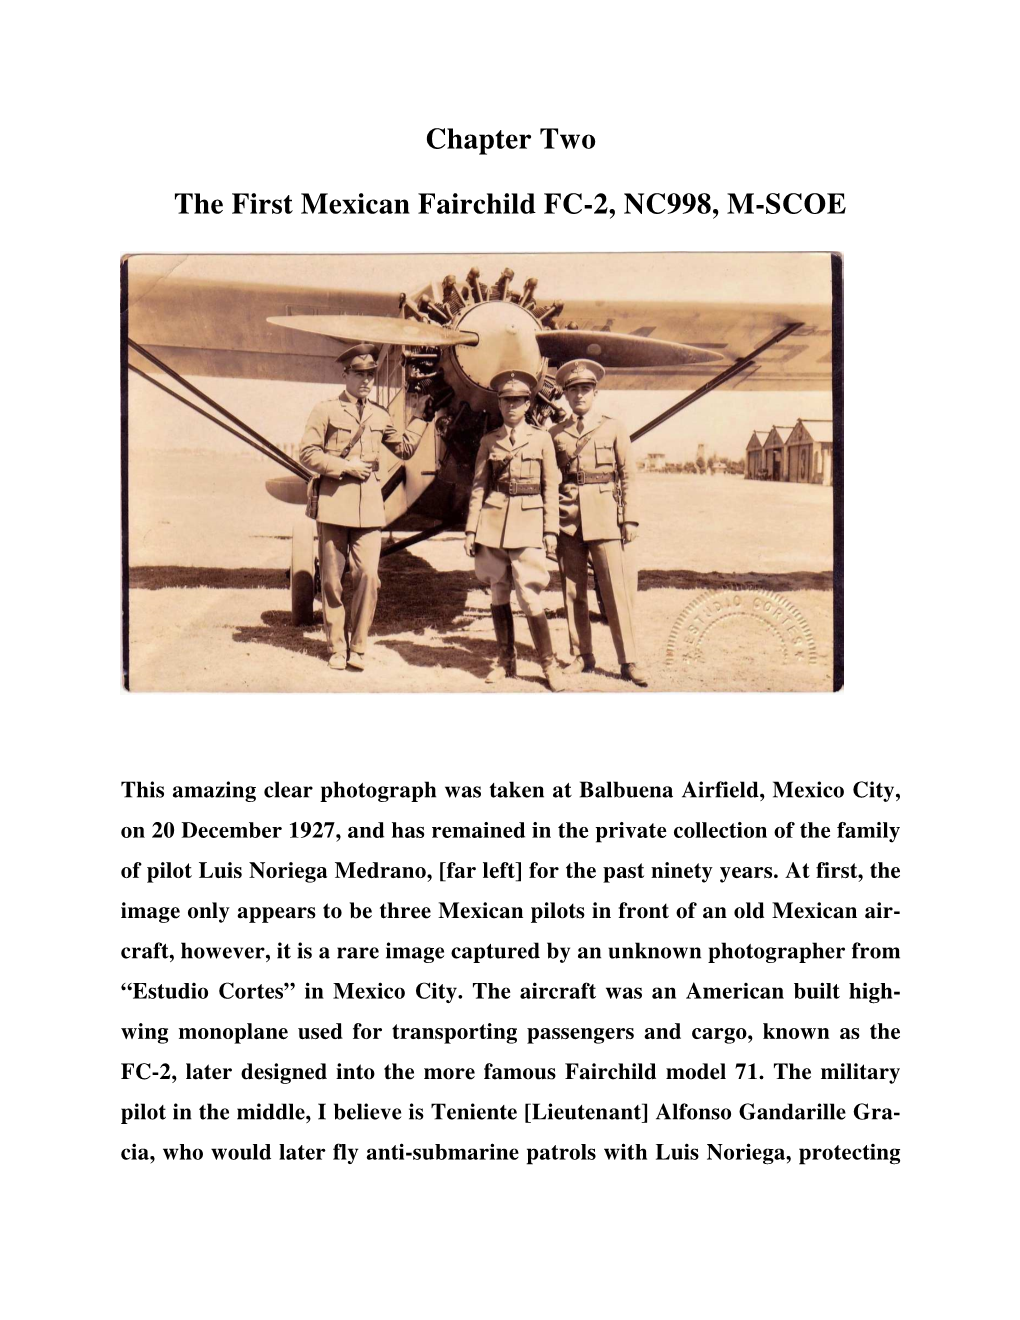 The First Mexican Fairchild FC-2, NC998, M-SCOE